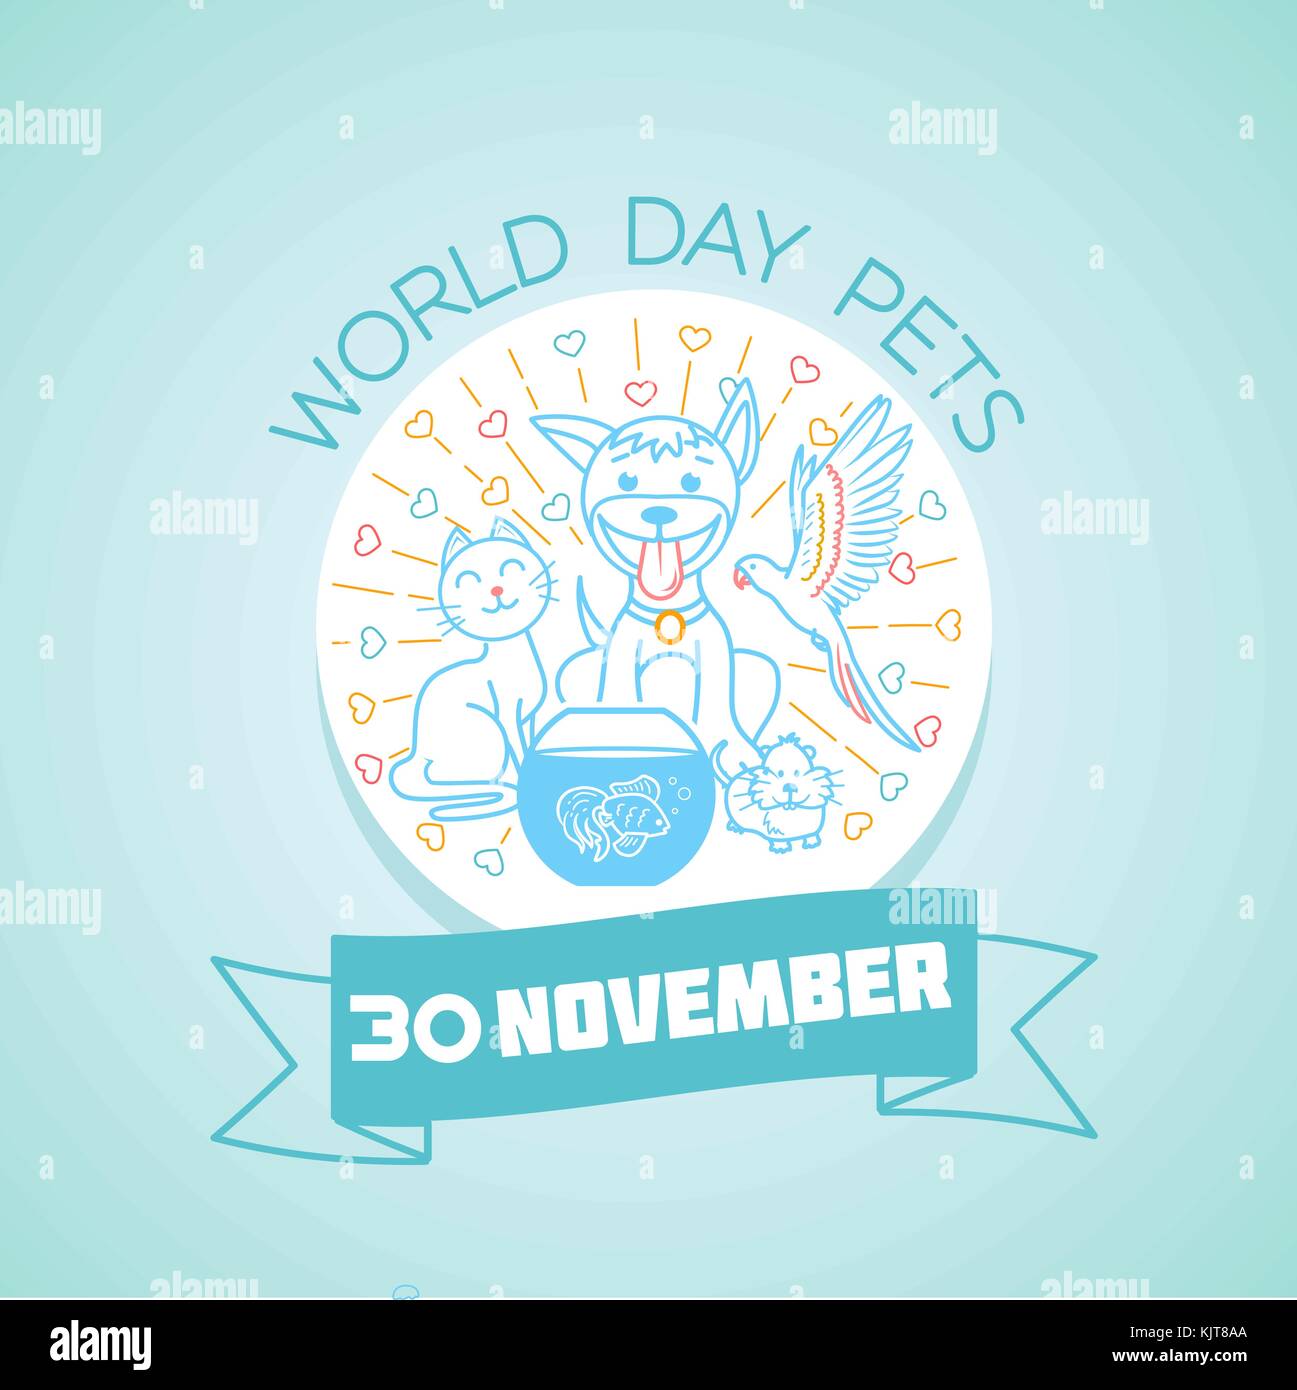 Days my pet. World Pets Day. World Pets Day 30 November. Всемирный день стерилизации домашних животных (World Spay Day). World Pets' Day pictures.